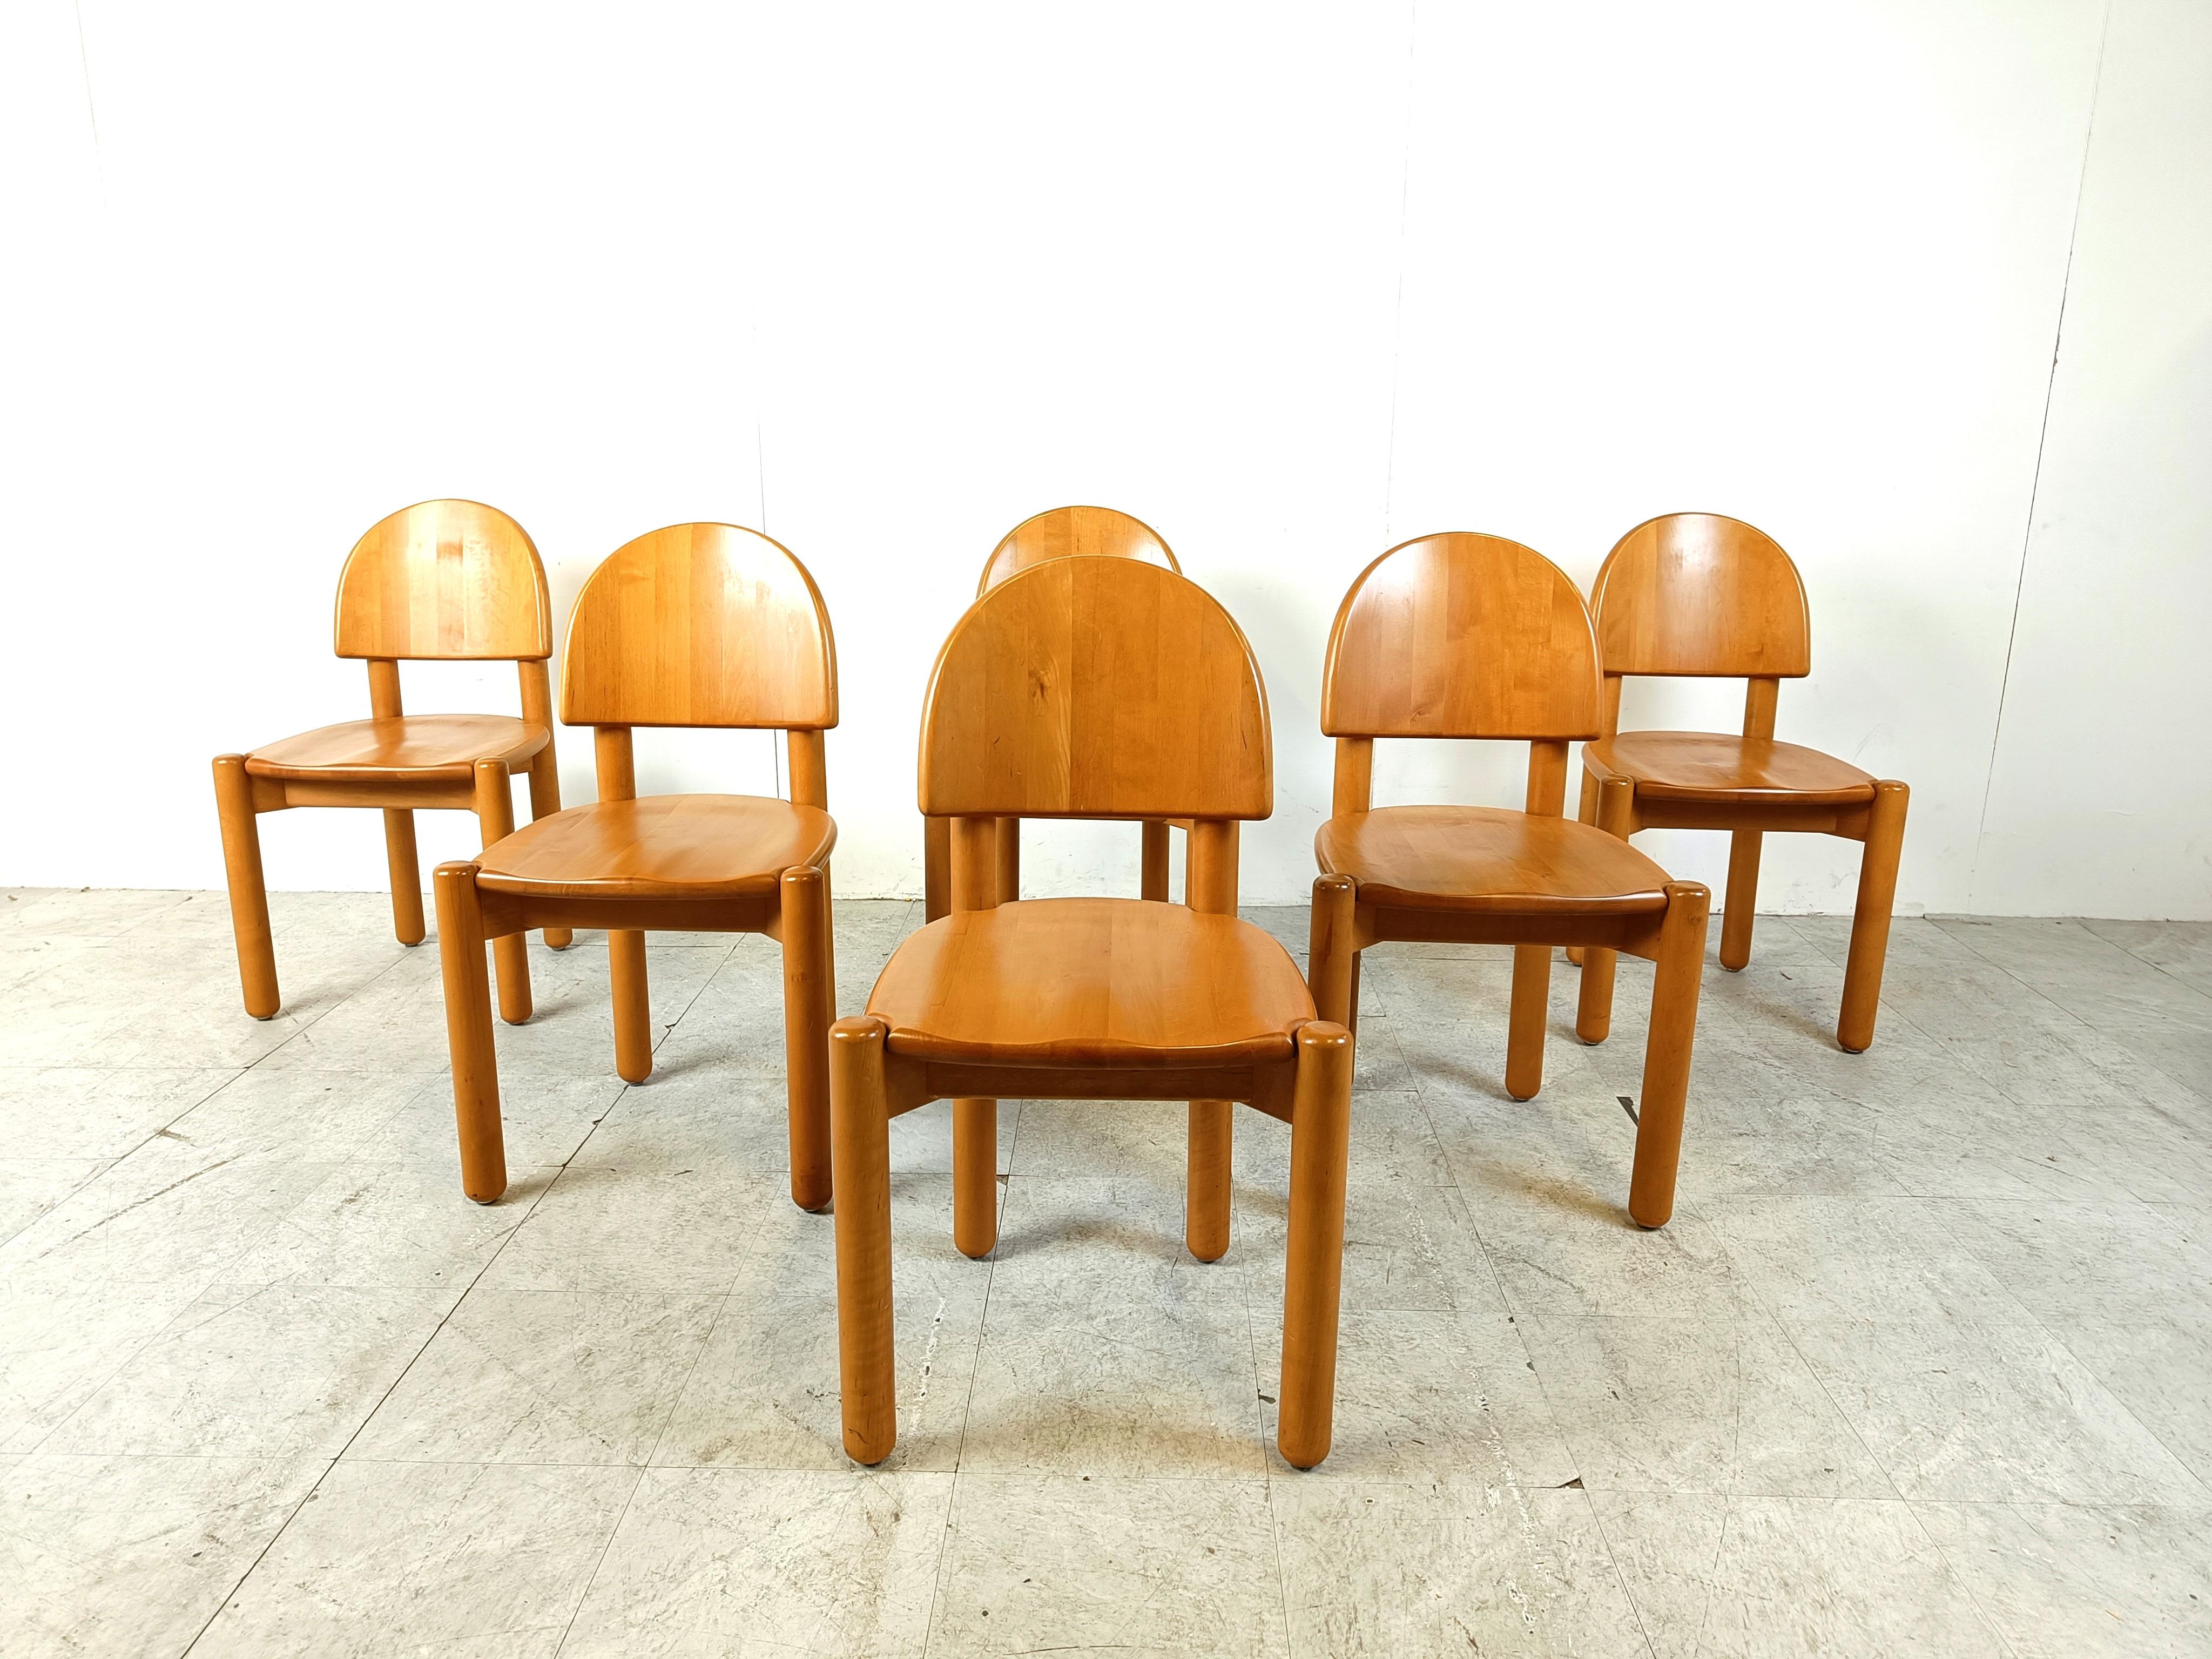 Scandinavian Modern Rainer Daumiller pine wood dining chairs for Hirtshals Savvaerk set of 6, 1980s